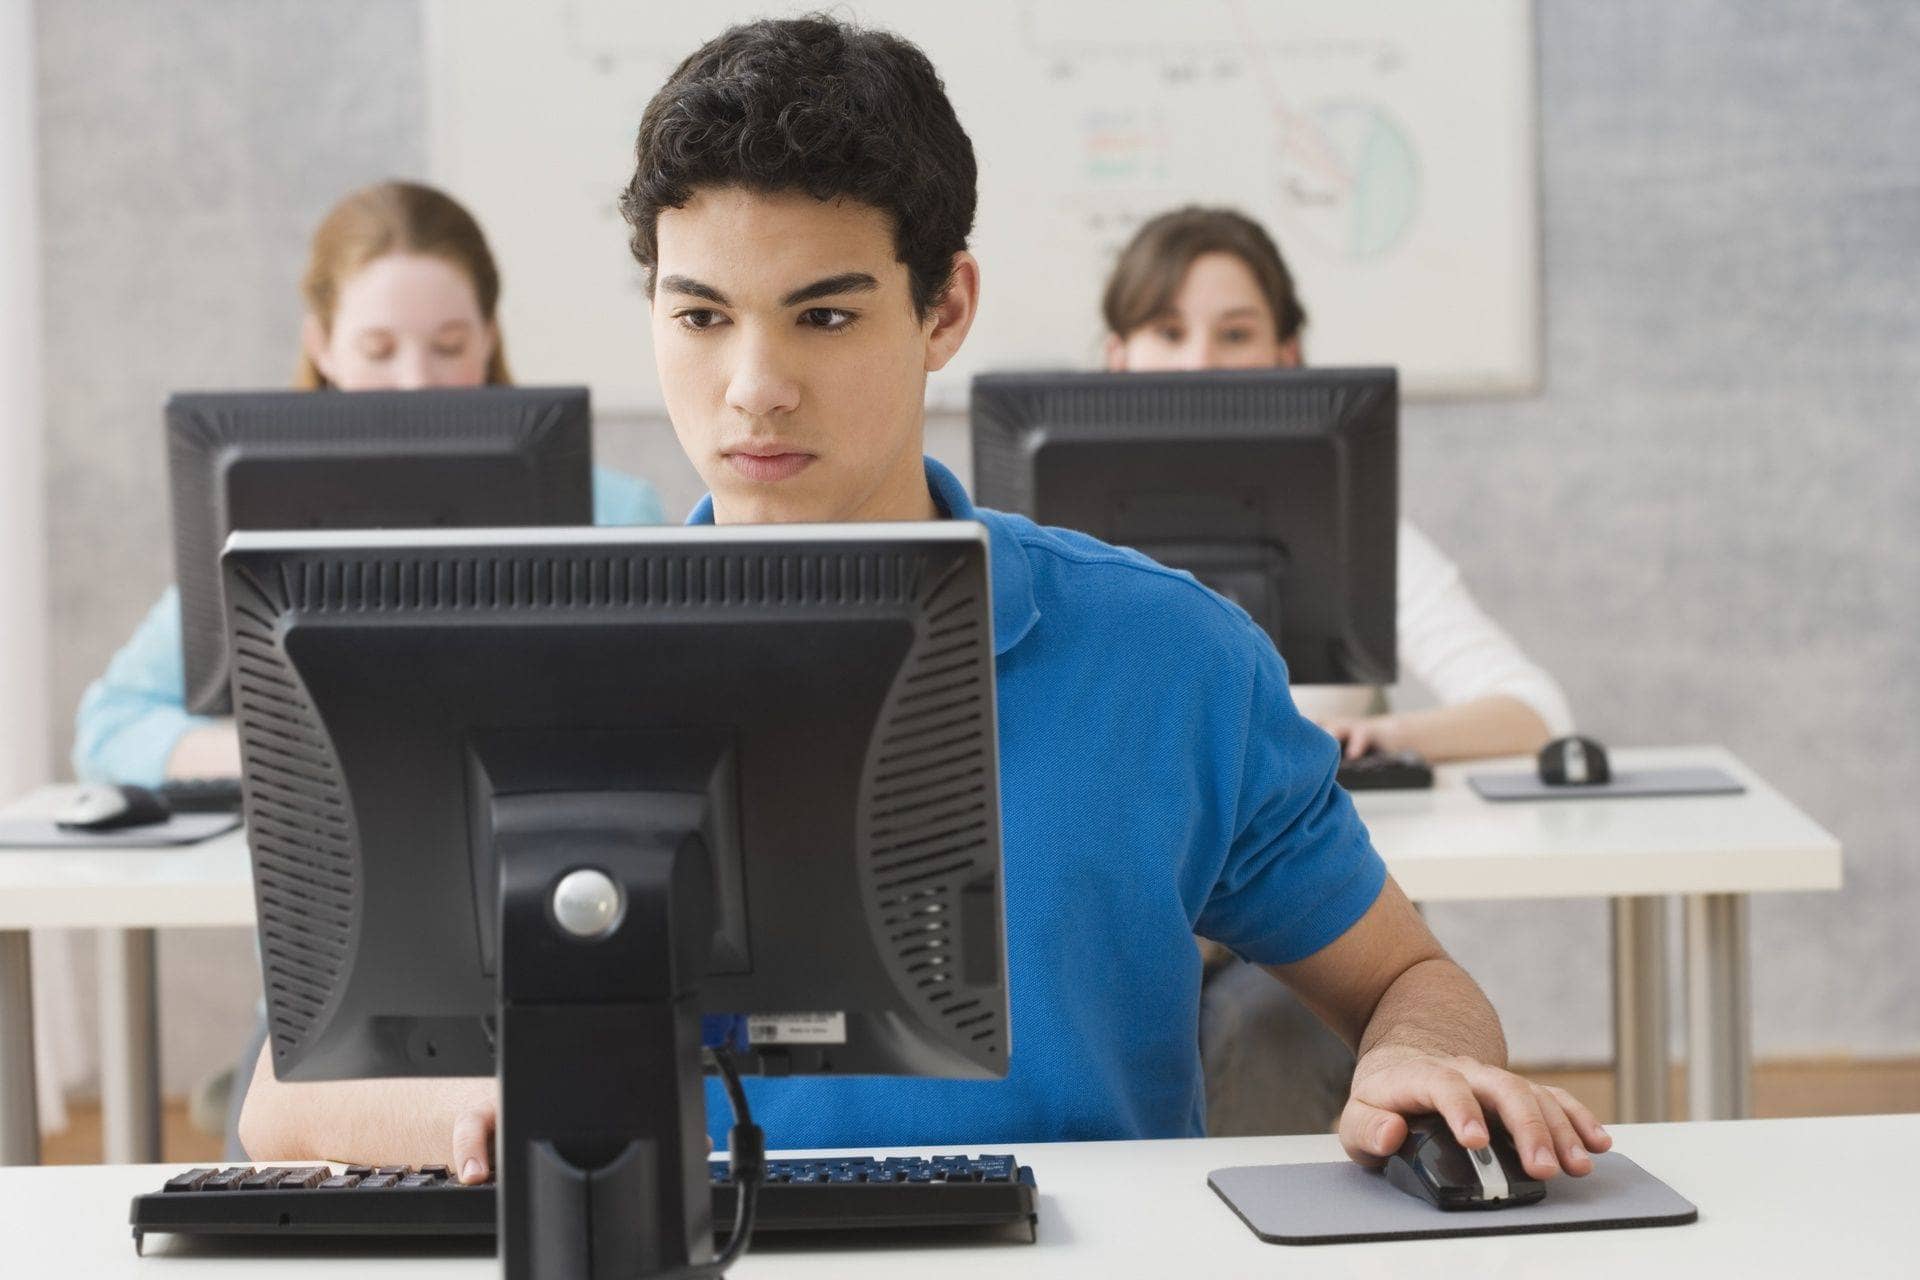 Helping on tests. Человек за компьютером. Студент за ПК. Компьютер и человек. Перед компьютером.